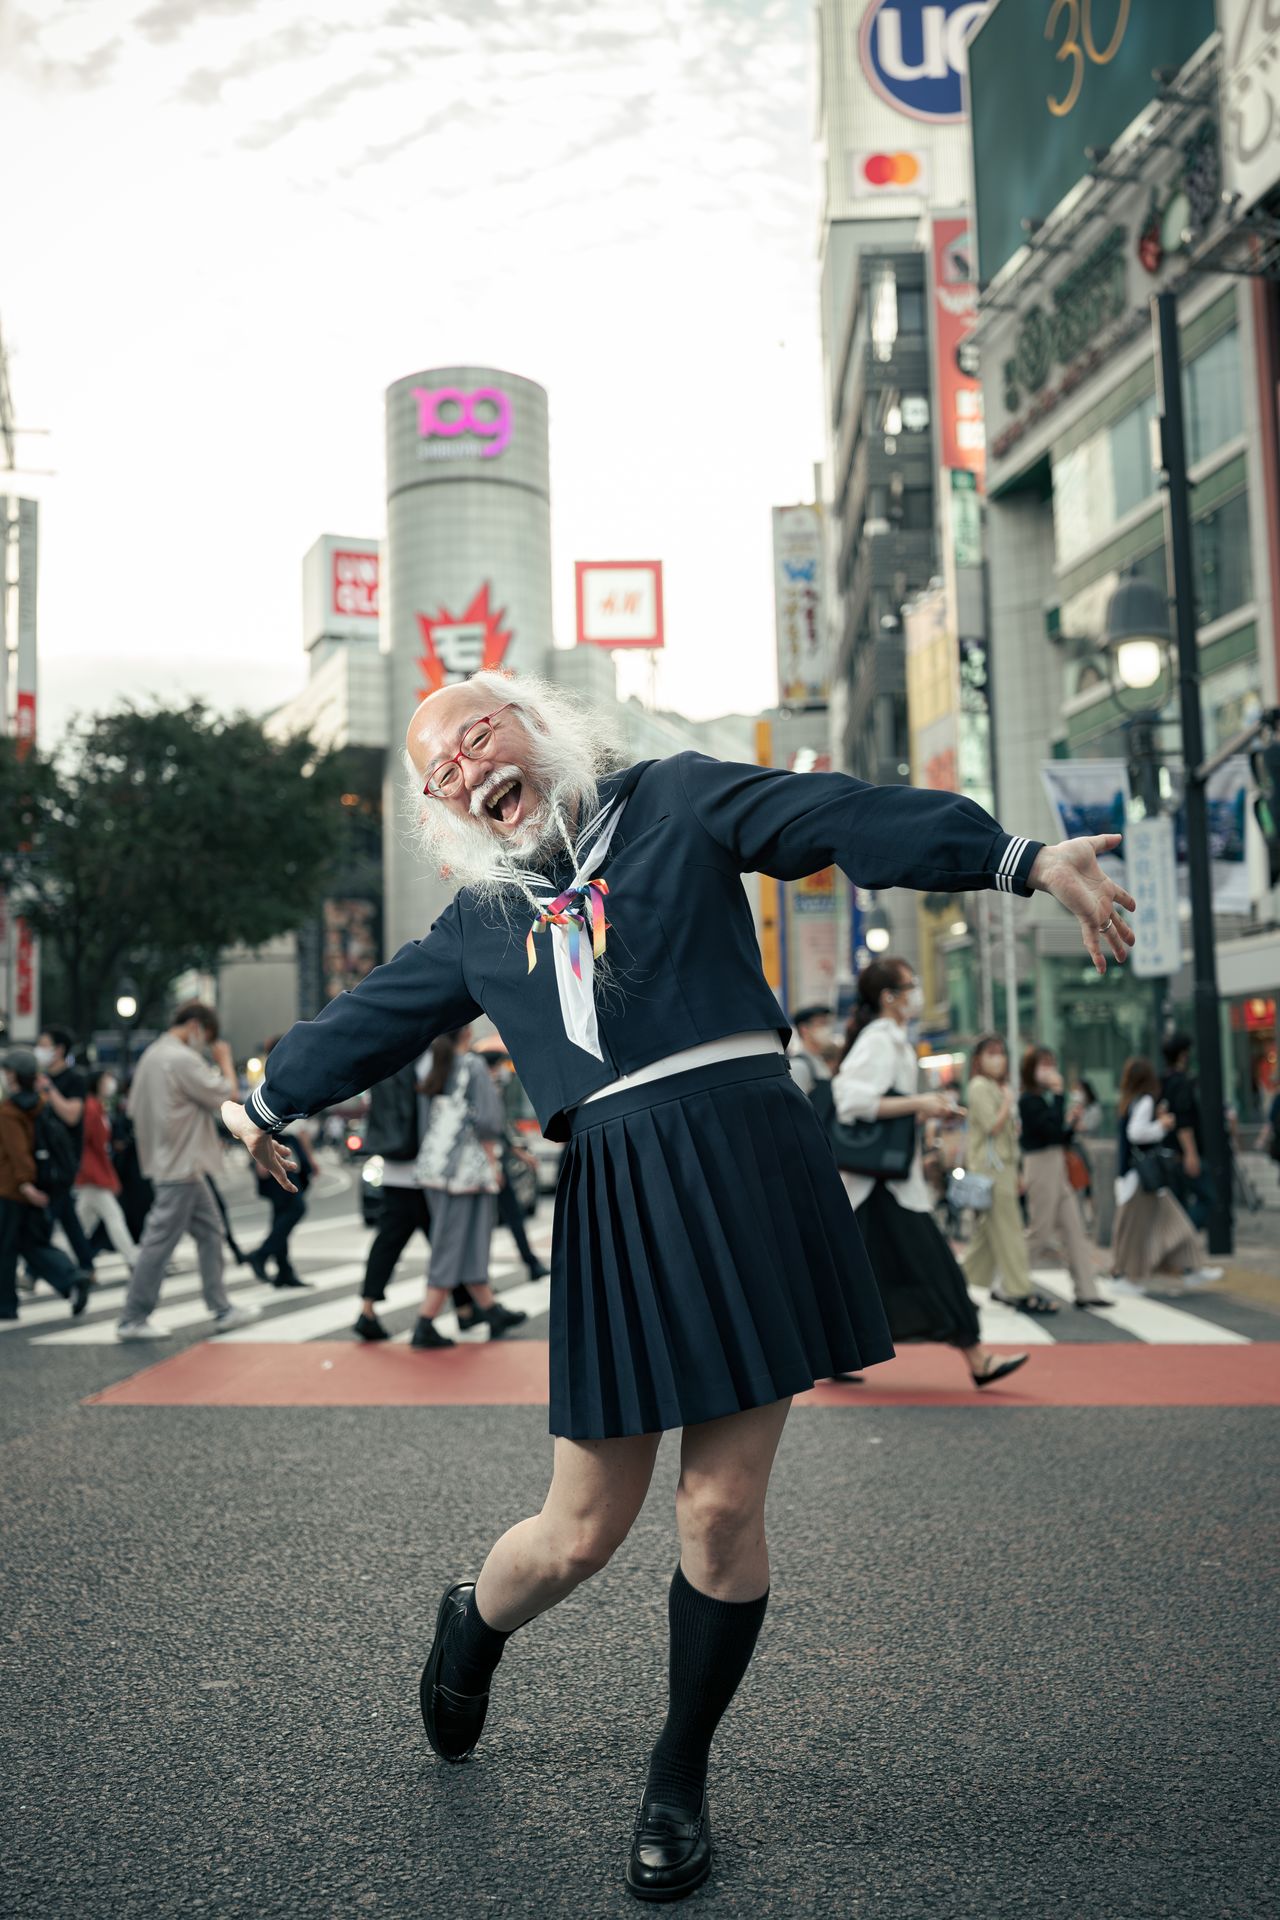 Kobayashi Hideaki, the “Sailor Uniform Grandpa.” (© Irwin Wong, Gestalten)